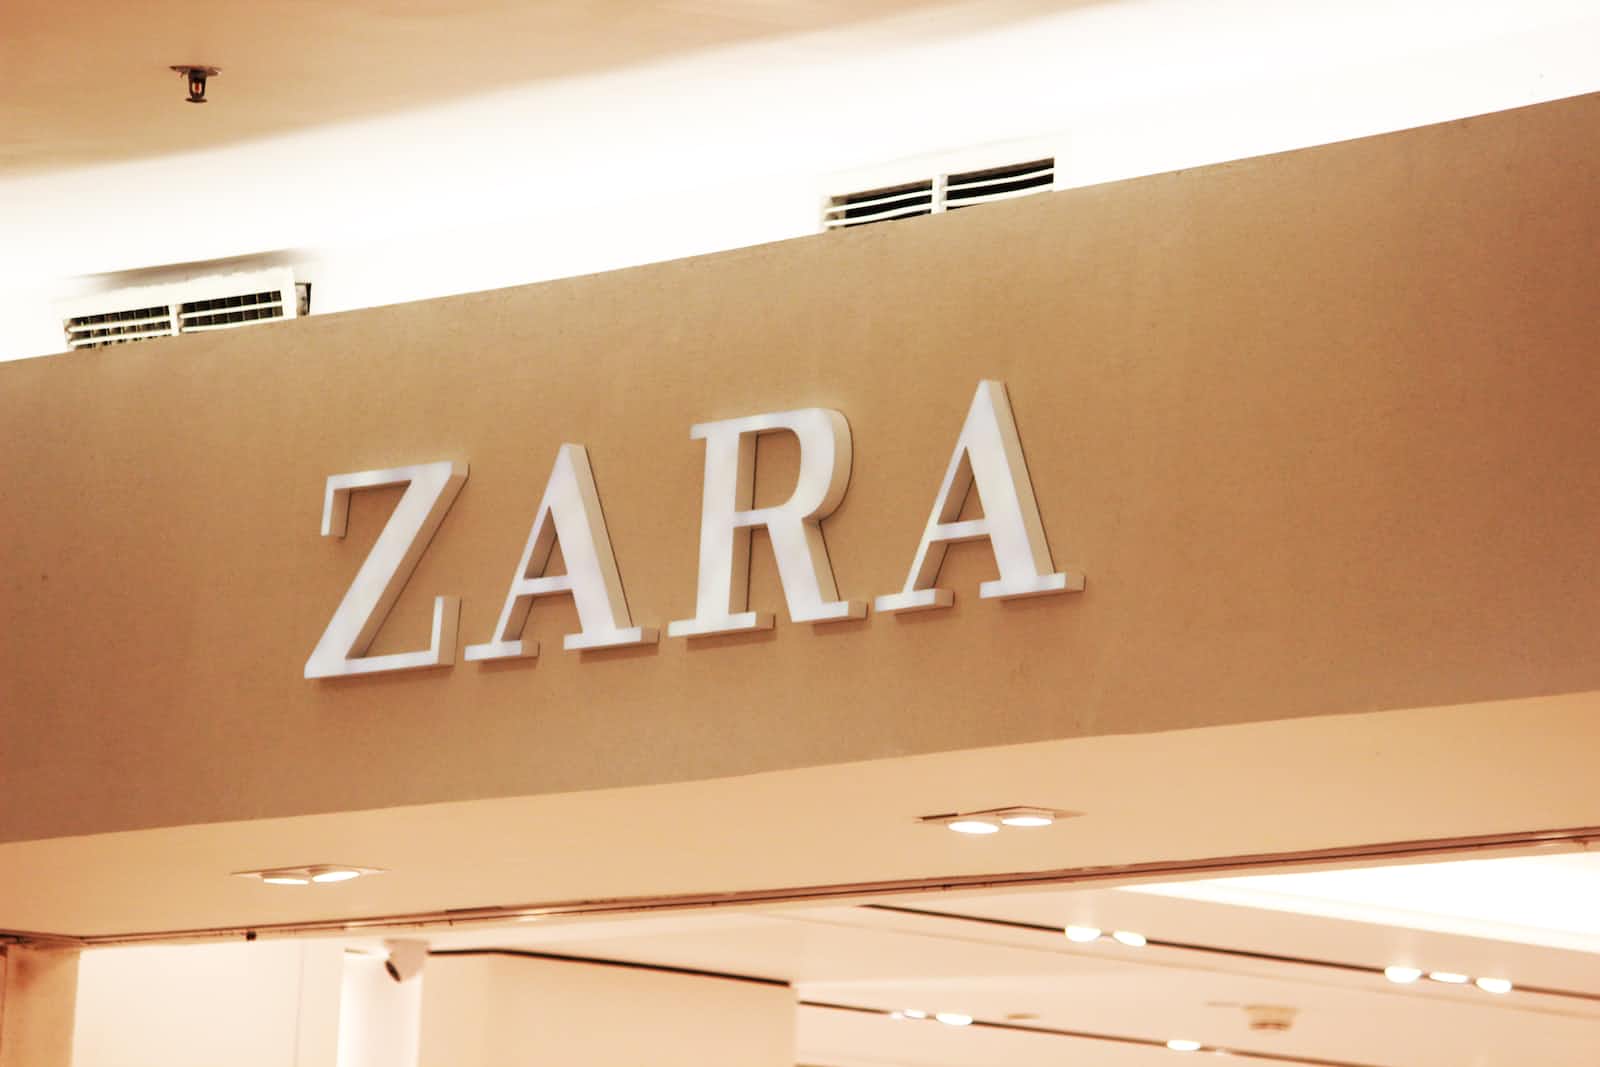 Zara trademark above a Zara store